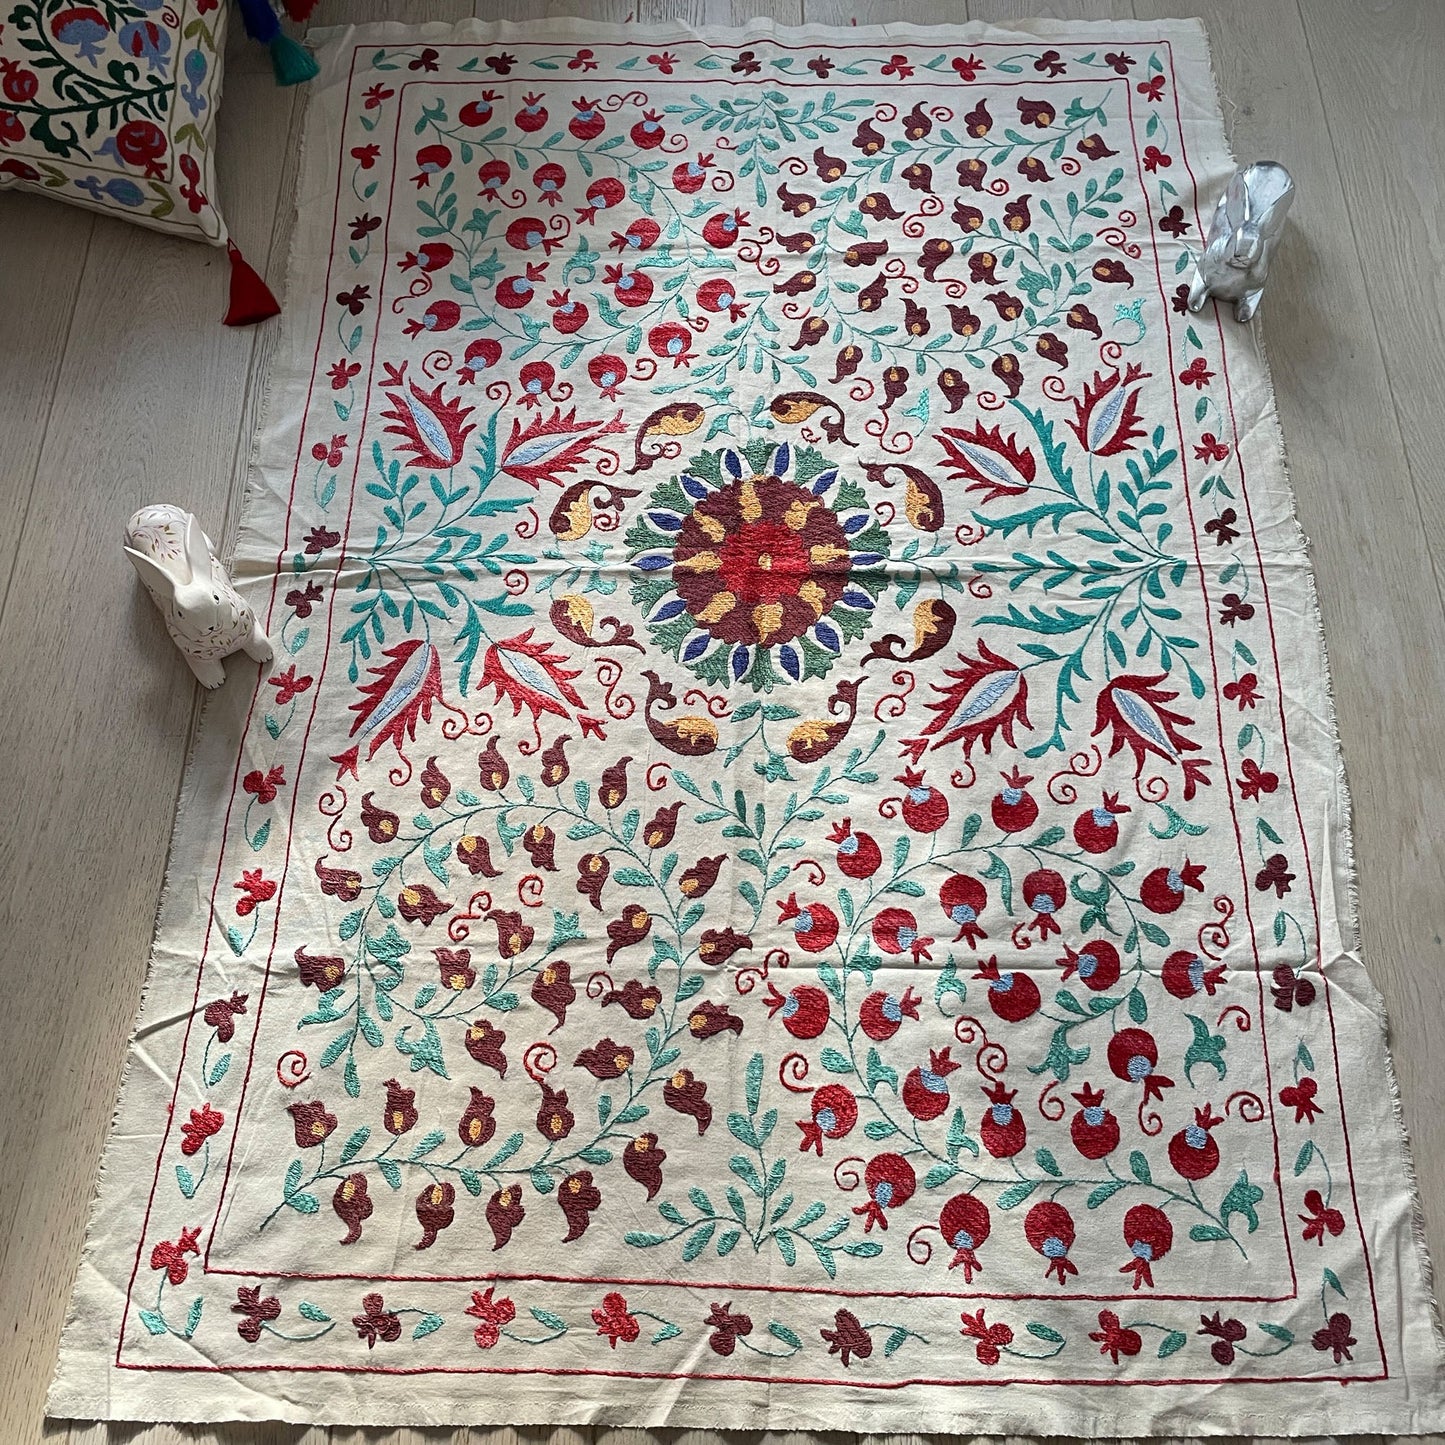 Uzbeki Suzani Hand Embroidered Textile Wall Hanging | Home Décor | Runner | 100cm x 150cm SUZ0410007 - Wildash London